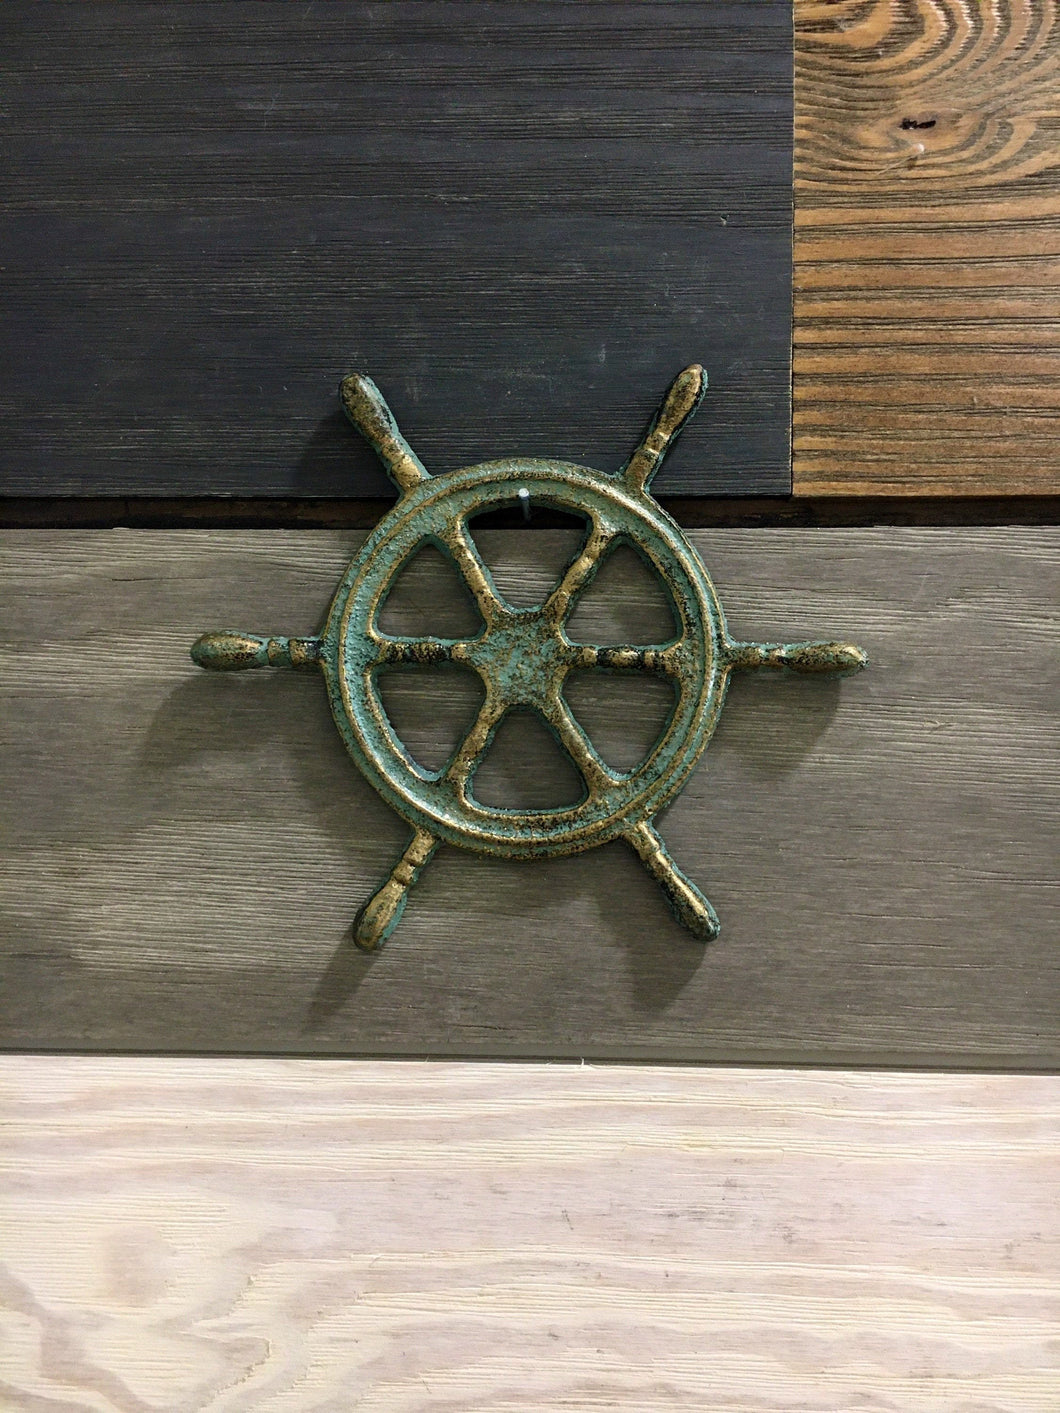 Patina Cast Iron Ships Wheel Wall Decor - Home Decor - Cast Iron - Castiron - Beach House - Star Fish - Nautical Decor - Wedding Gift - Gift